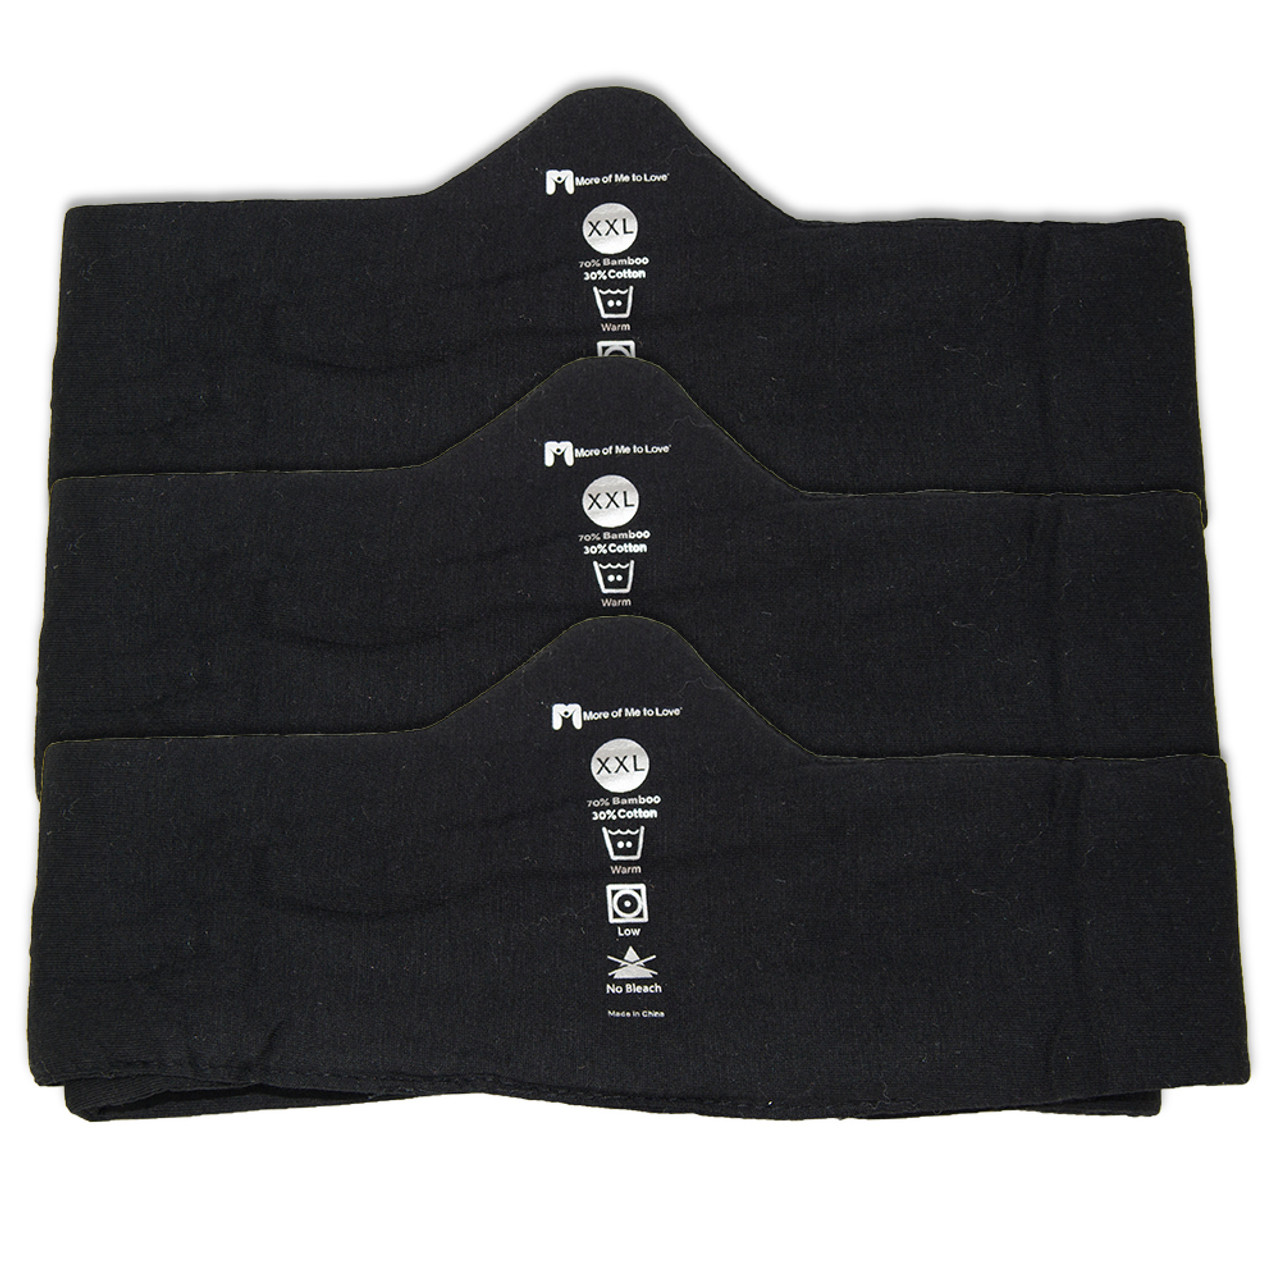 100% Cotton Bra Liner 3-Pack - Black / White / Beige - X-Large (2